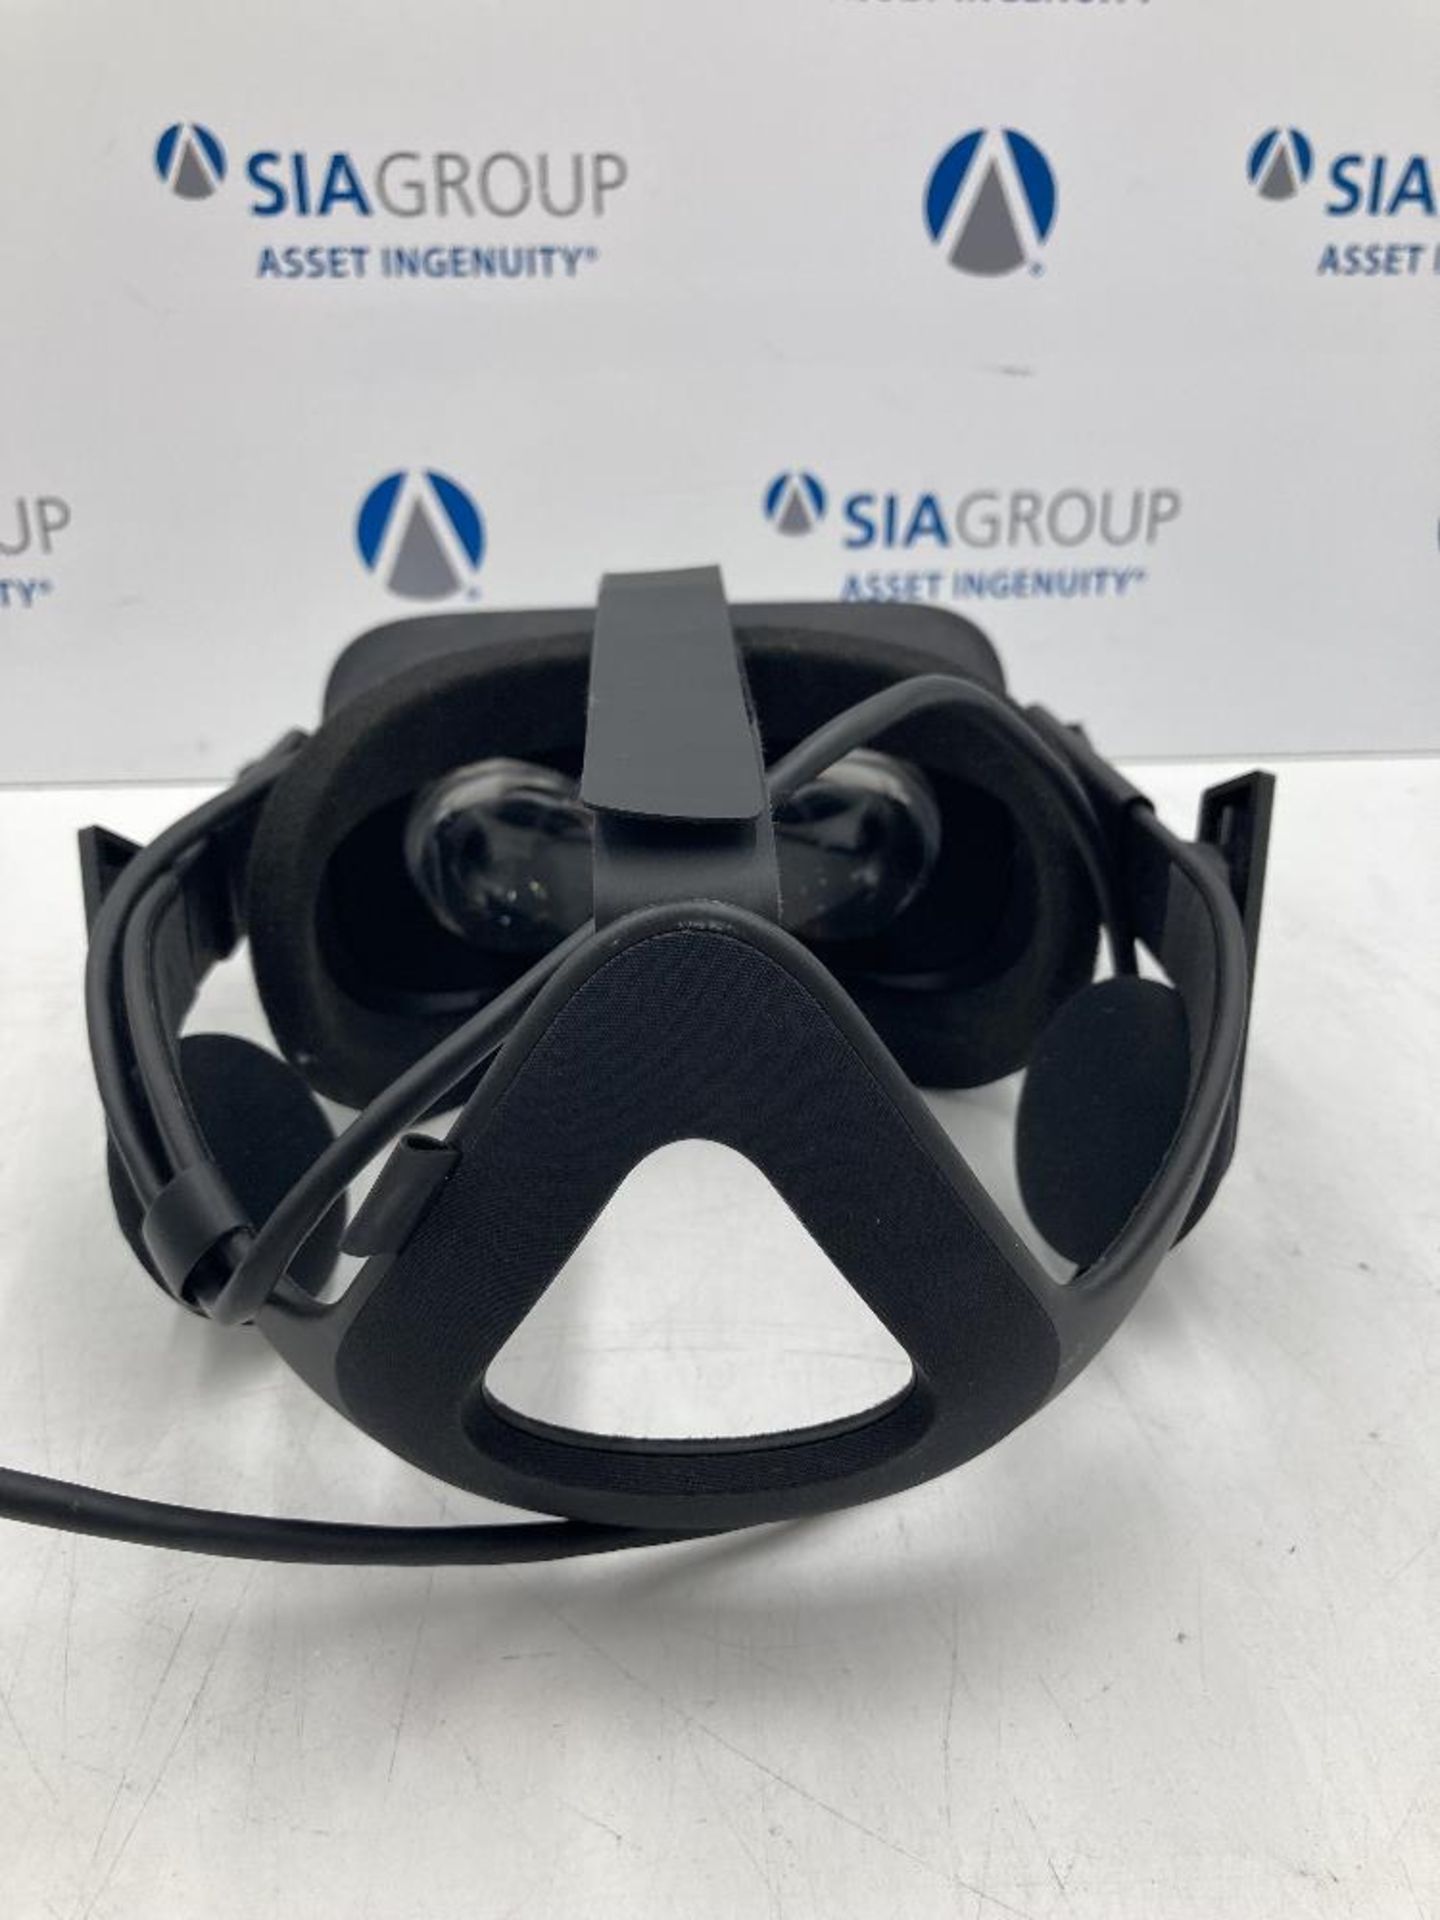 Oculus Rift Virtual Reality Kit - Image 4 of 8